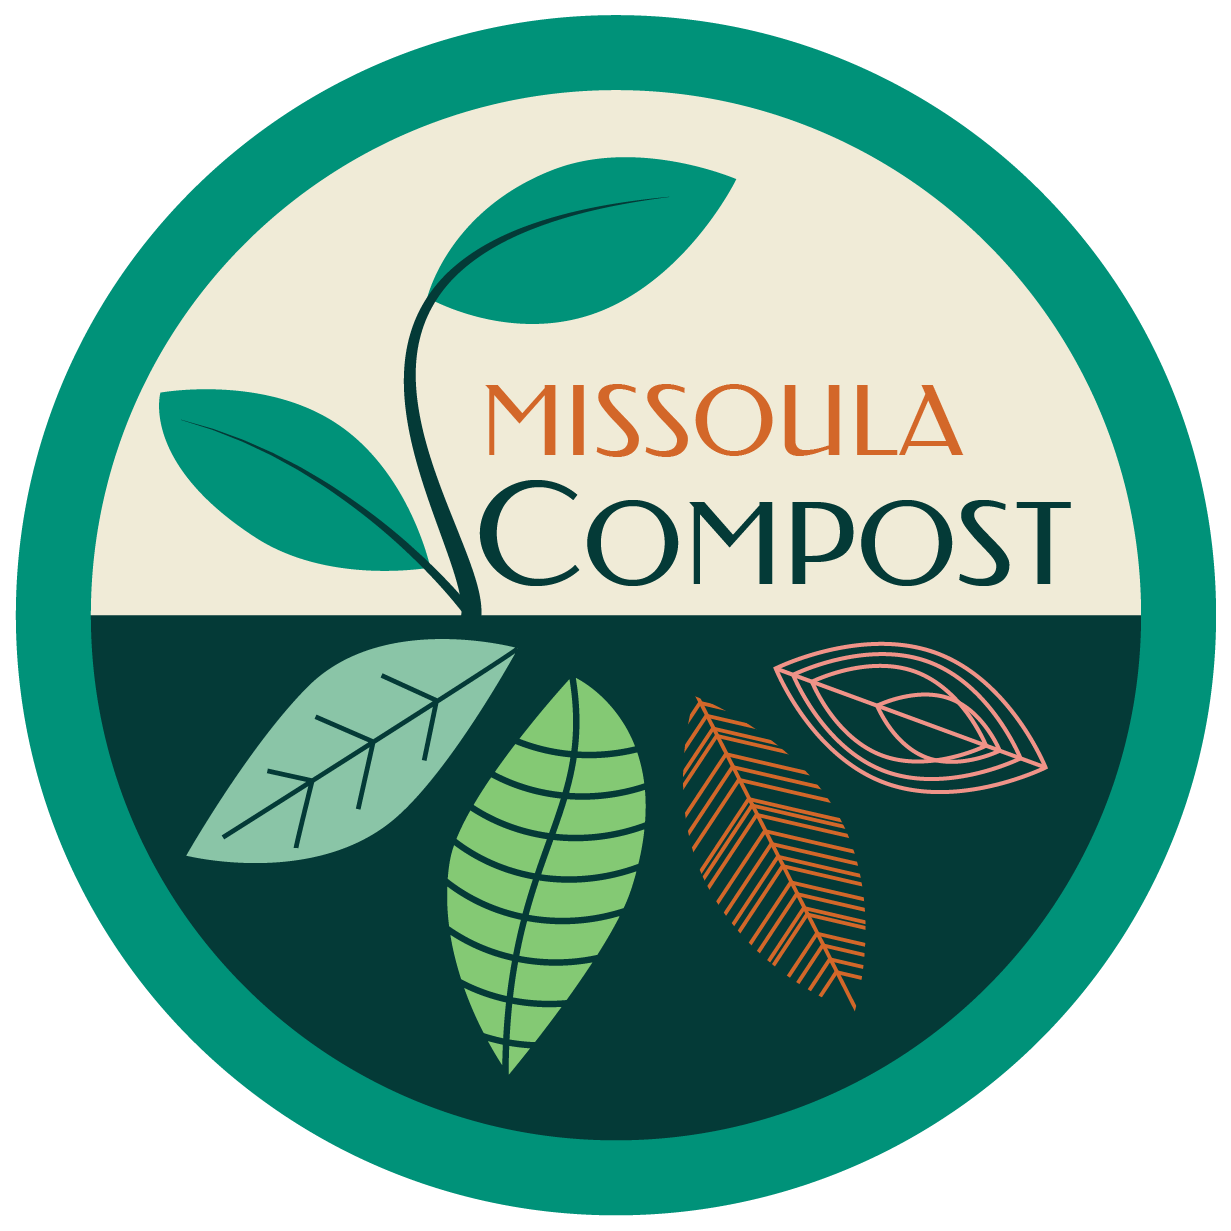 Missoula Compost: Sponsor of the Very Important Griz (VIG) Program